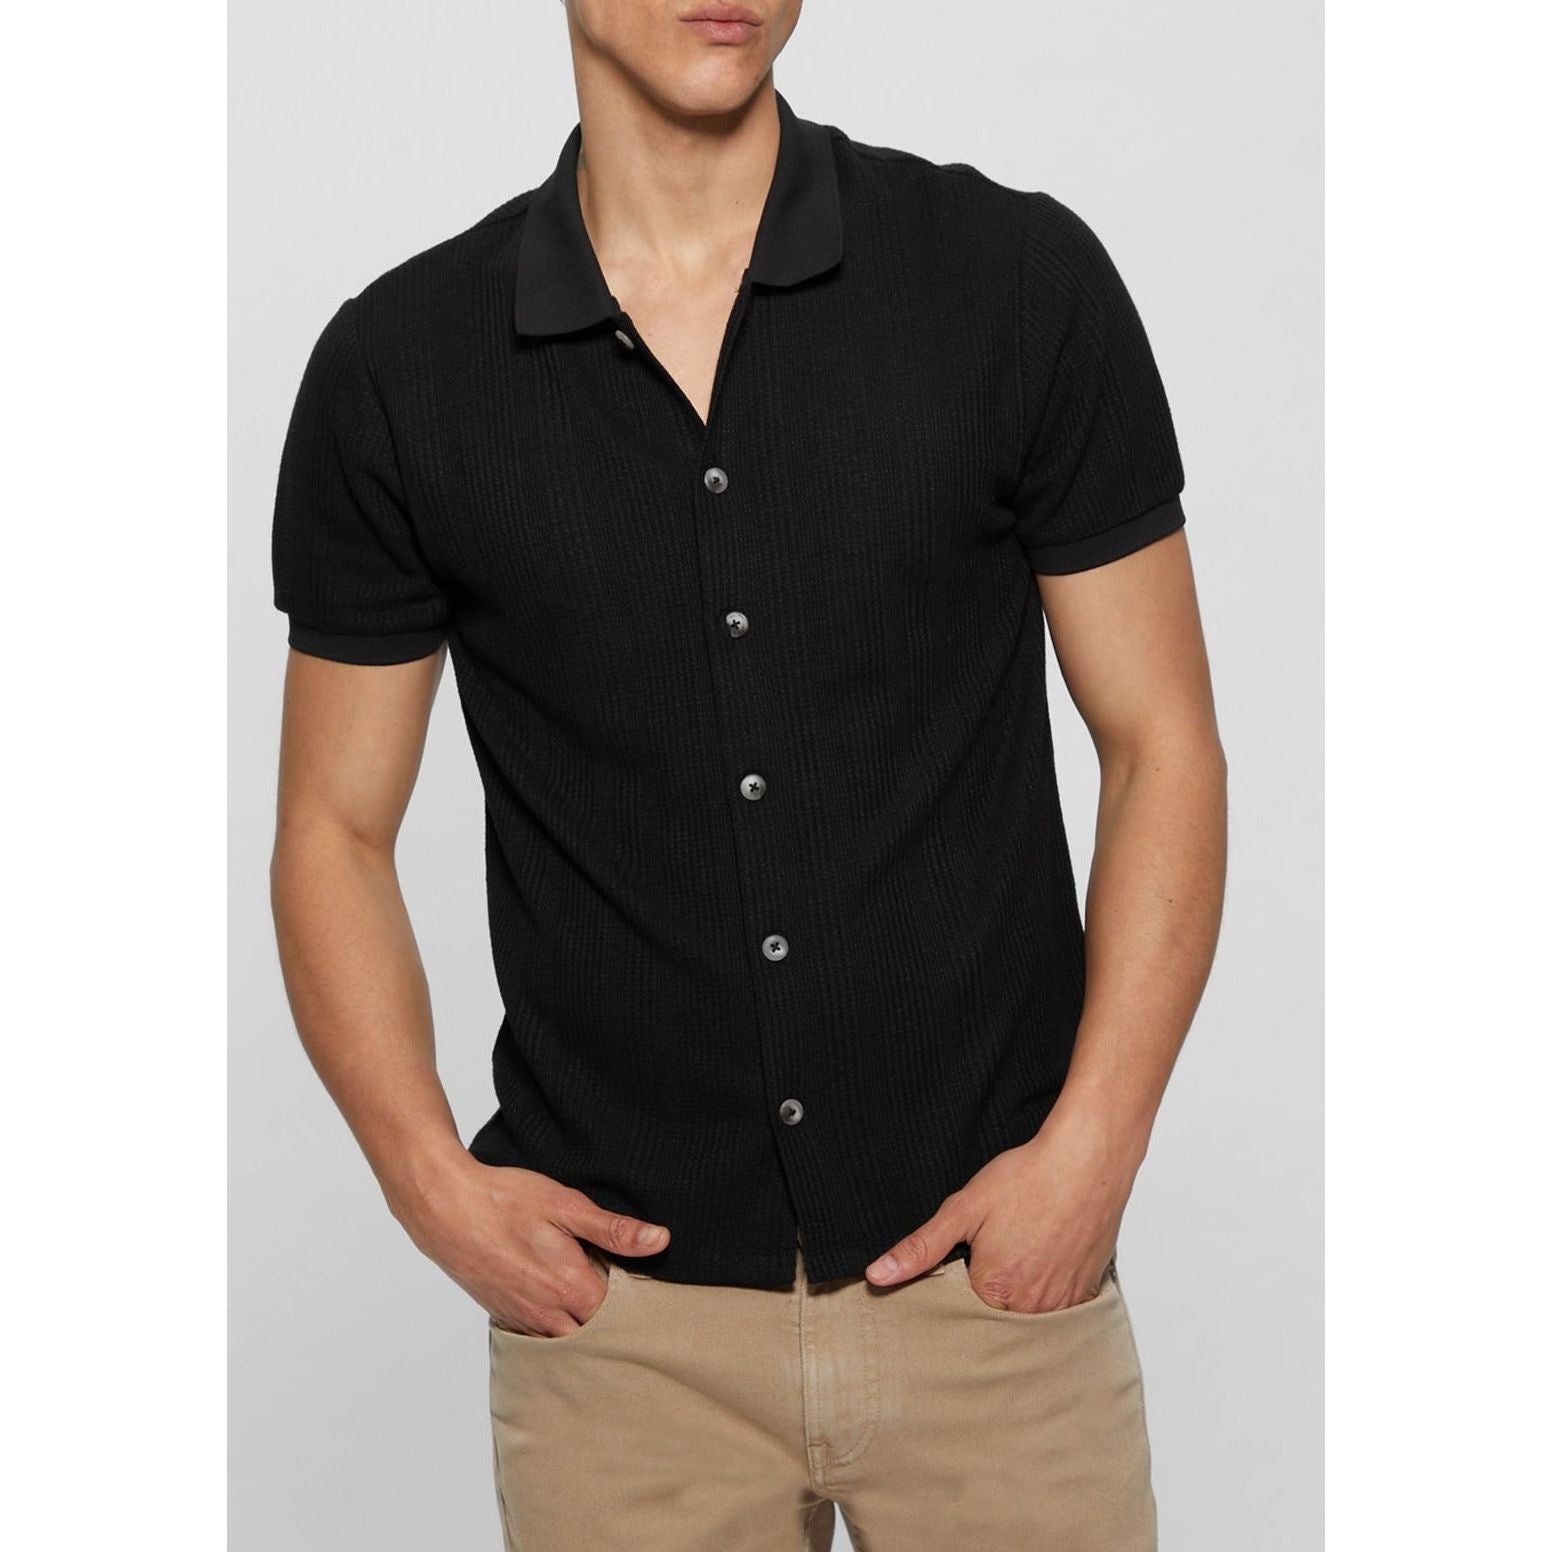 Guess - Joshua Soft Knit Shirt in Black